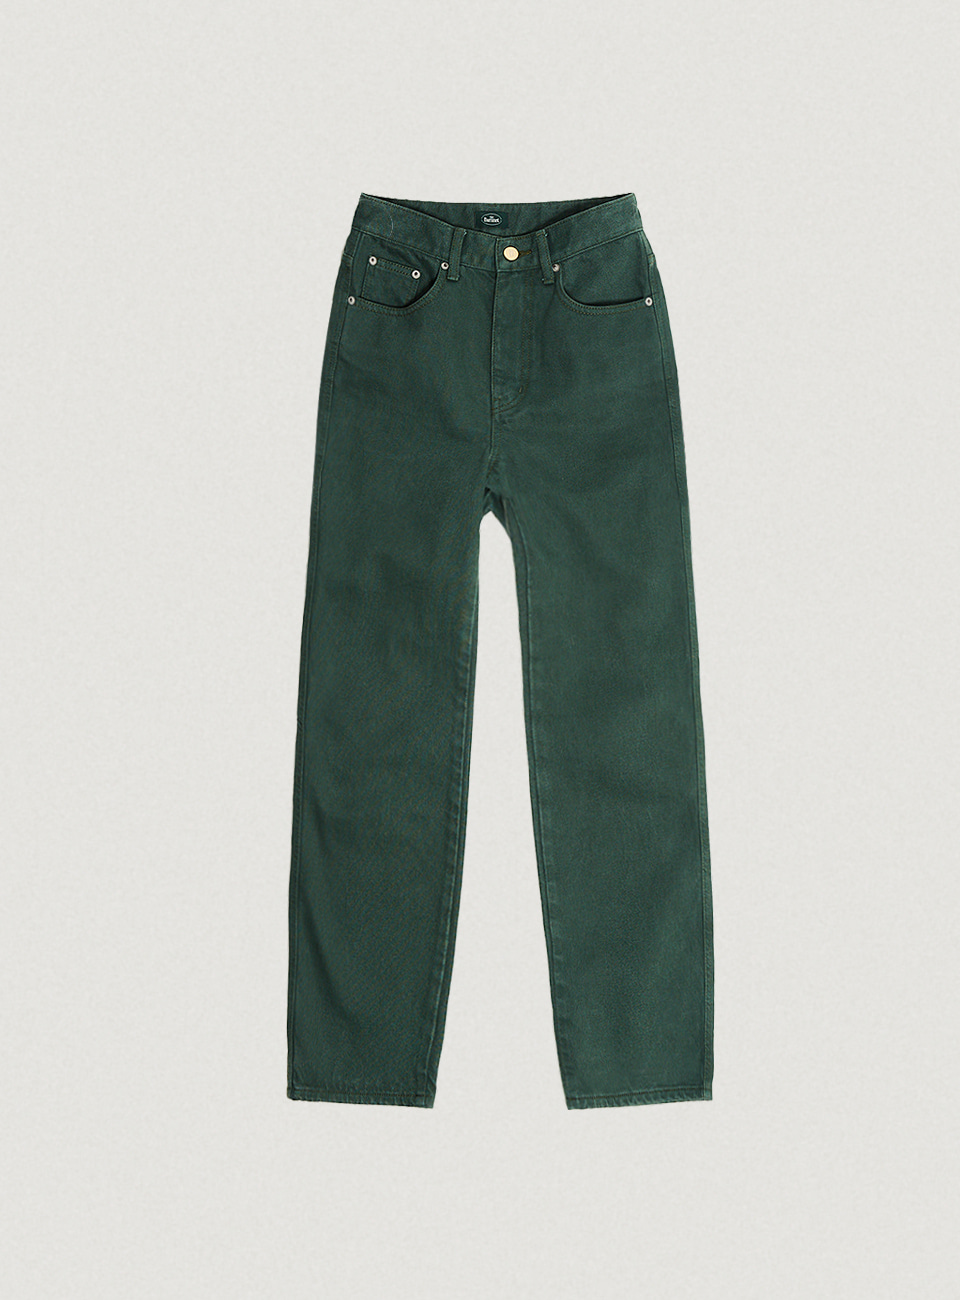 Green Bolide Denim Pants